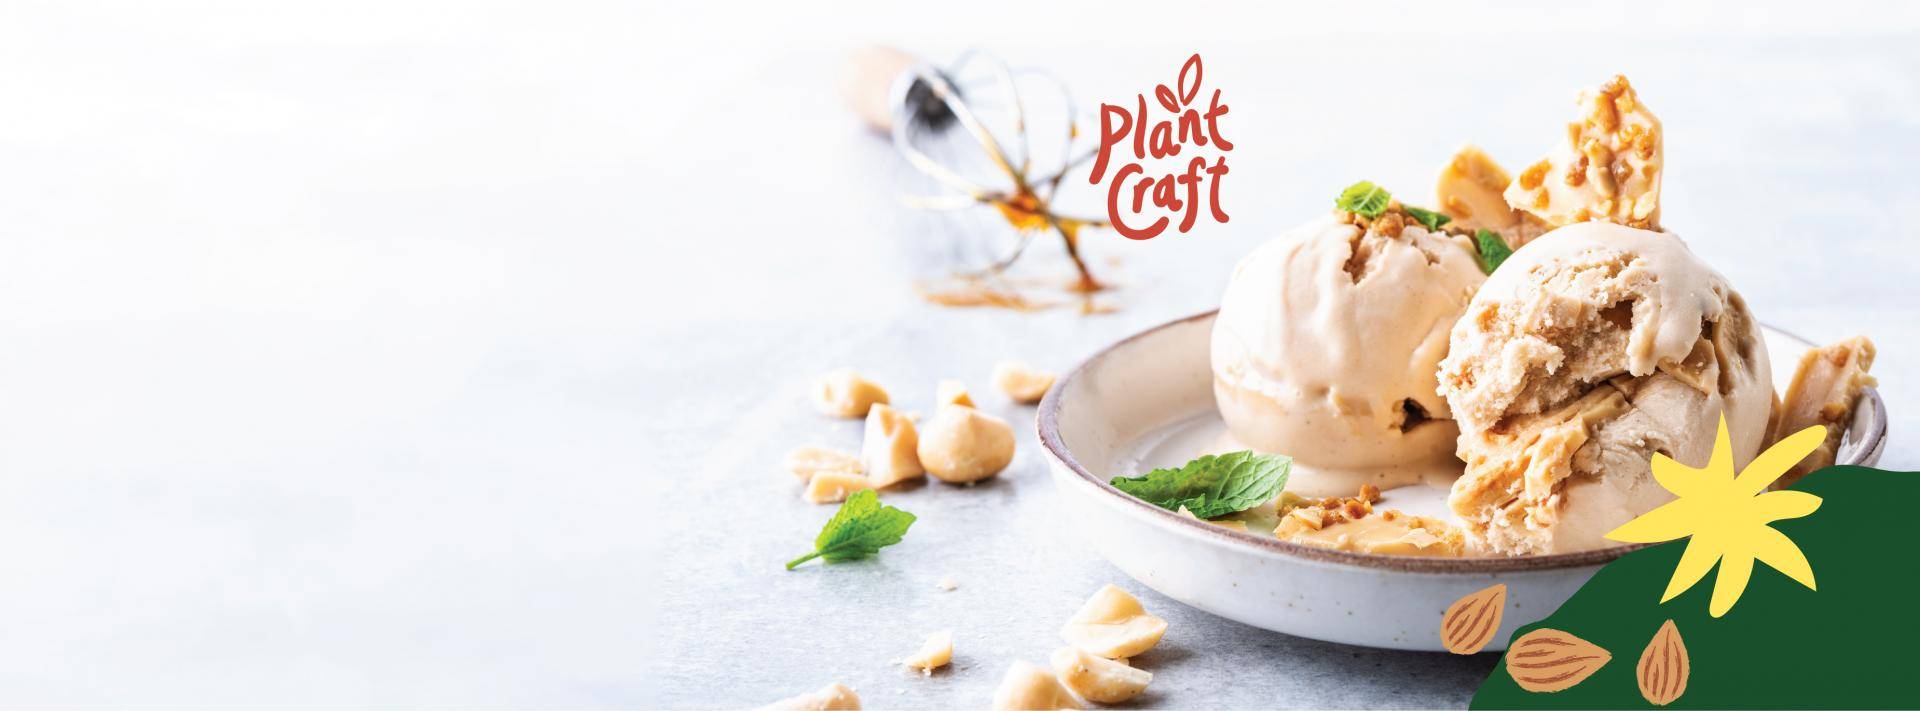 Plant craft webinar - October 1st 2020